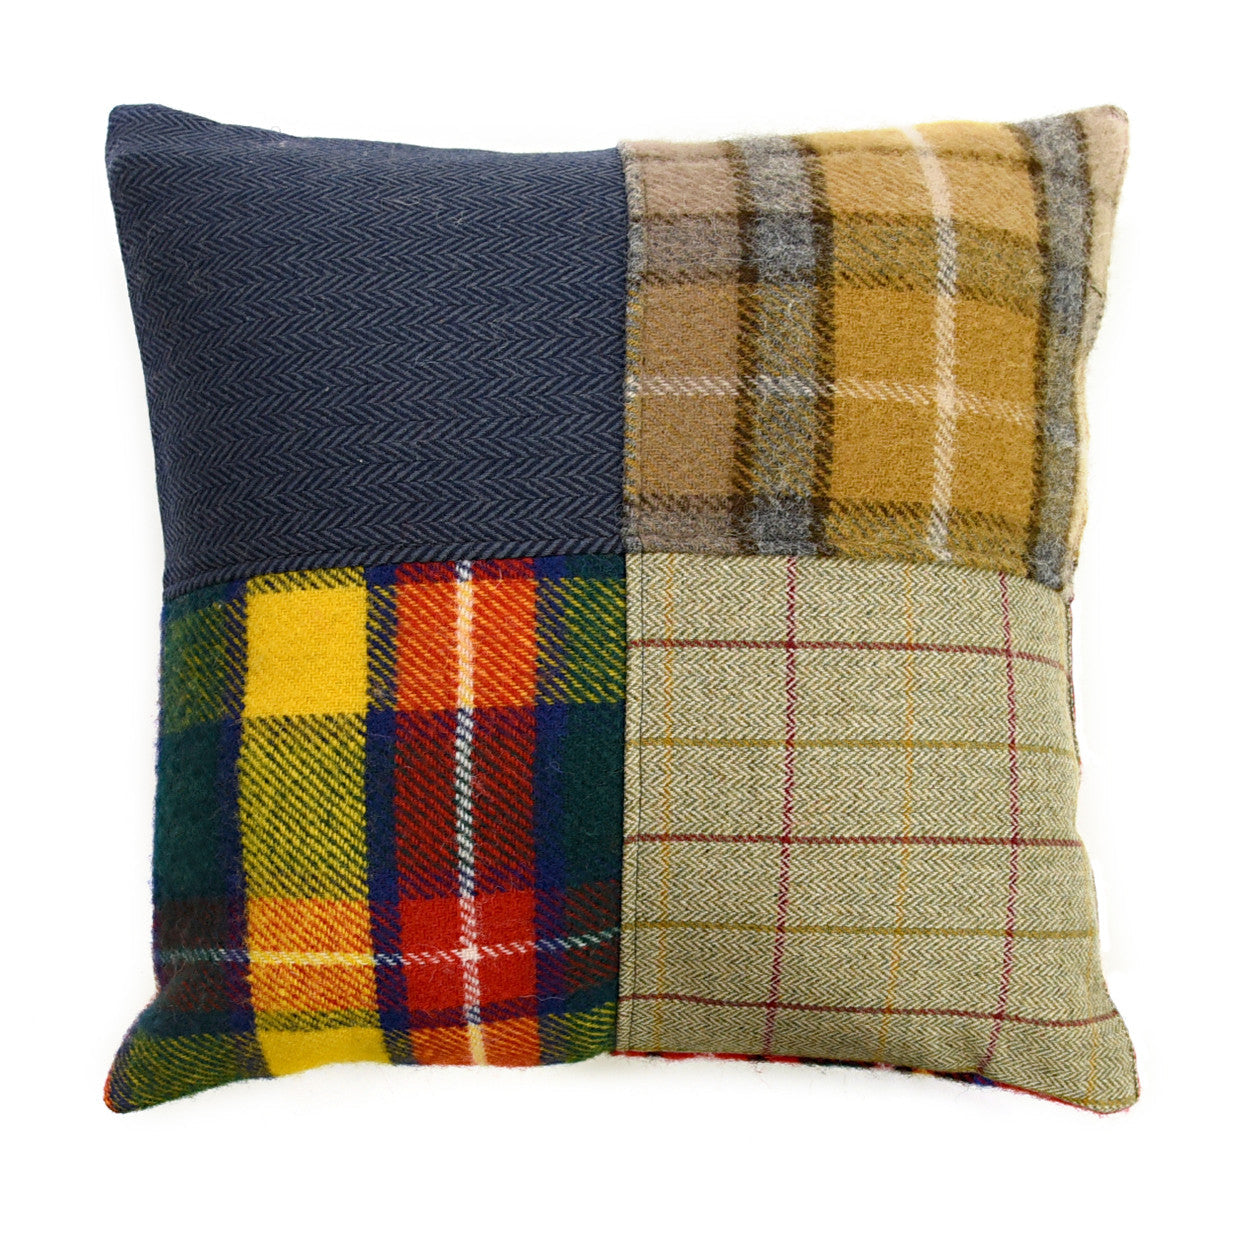 Small Tartan & Tweed Wool Cushion - The Nancy Smillie Shop - Art, Jewellery & Designer Gifts Glasgow